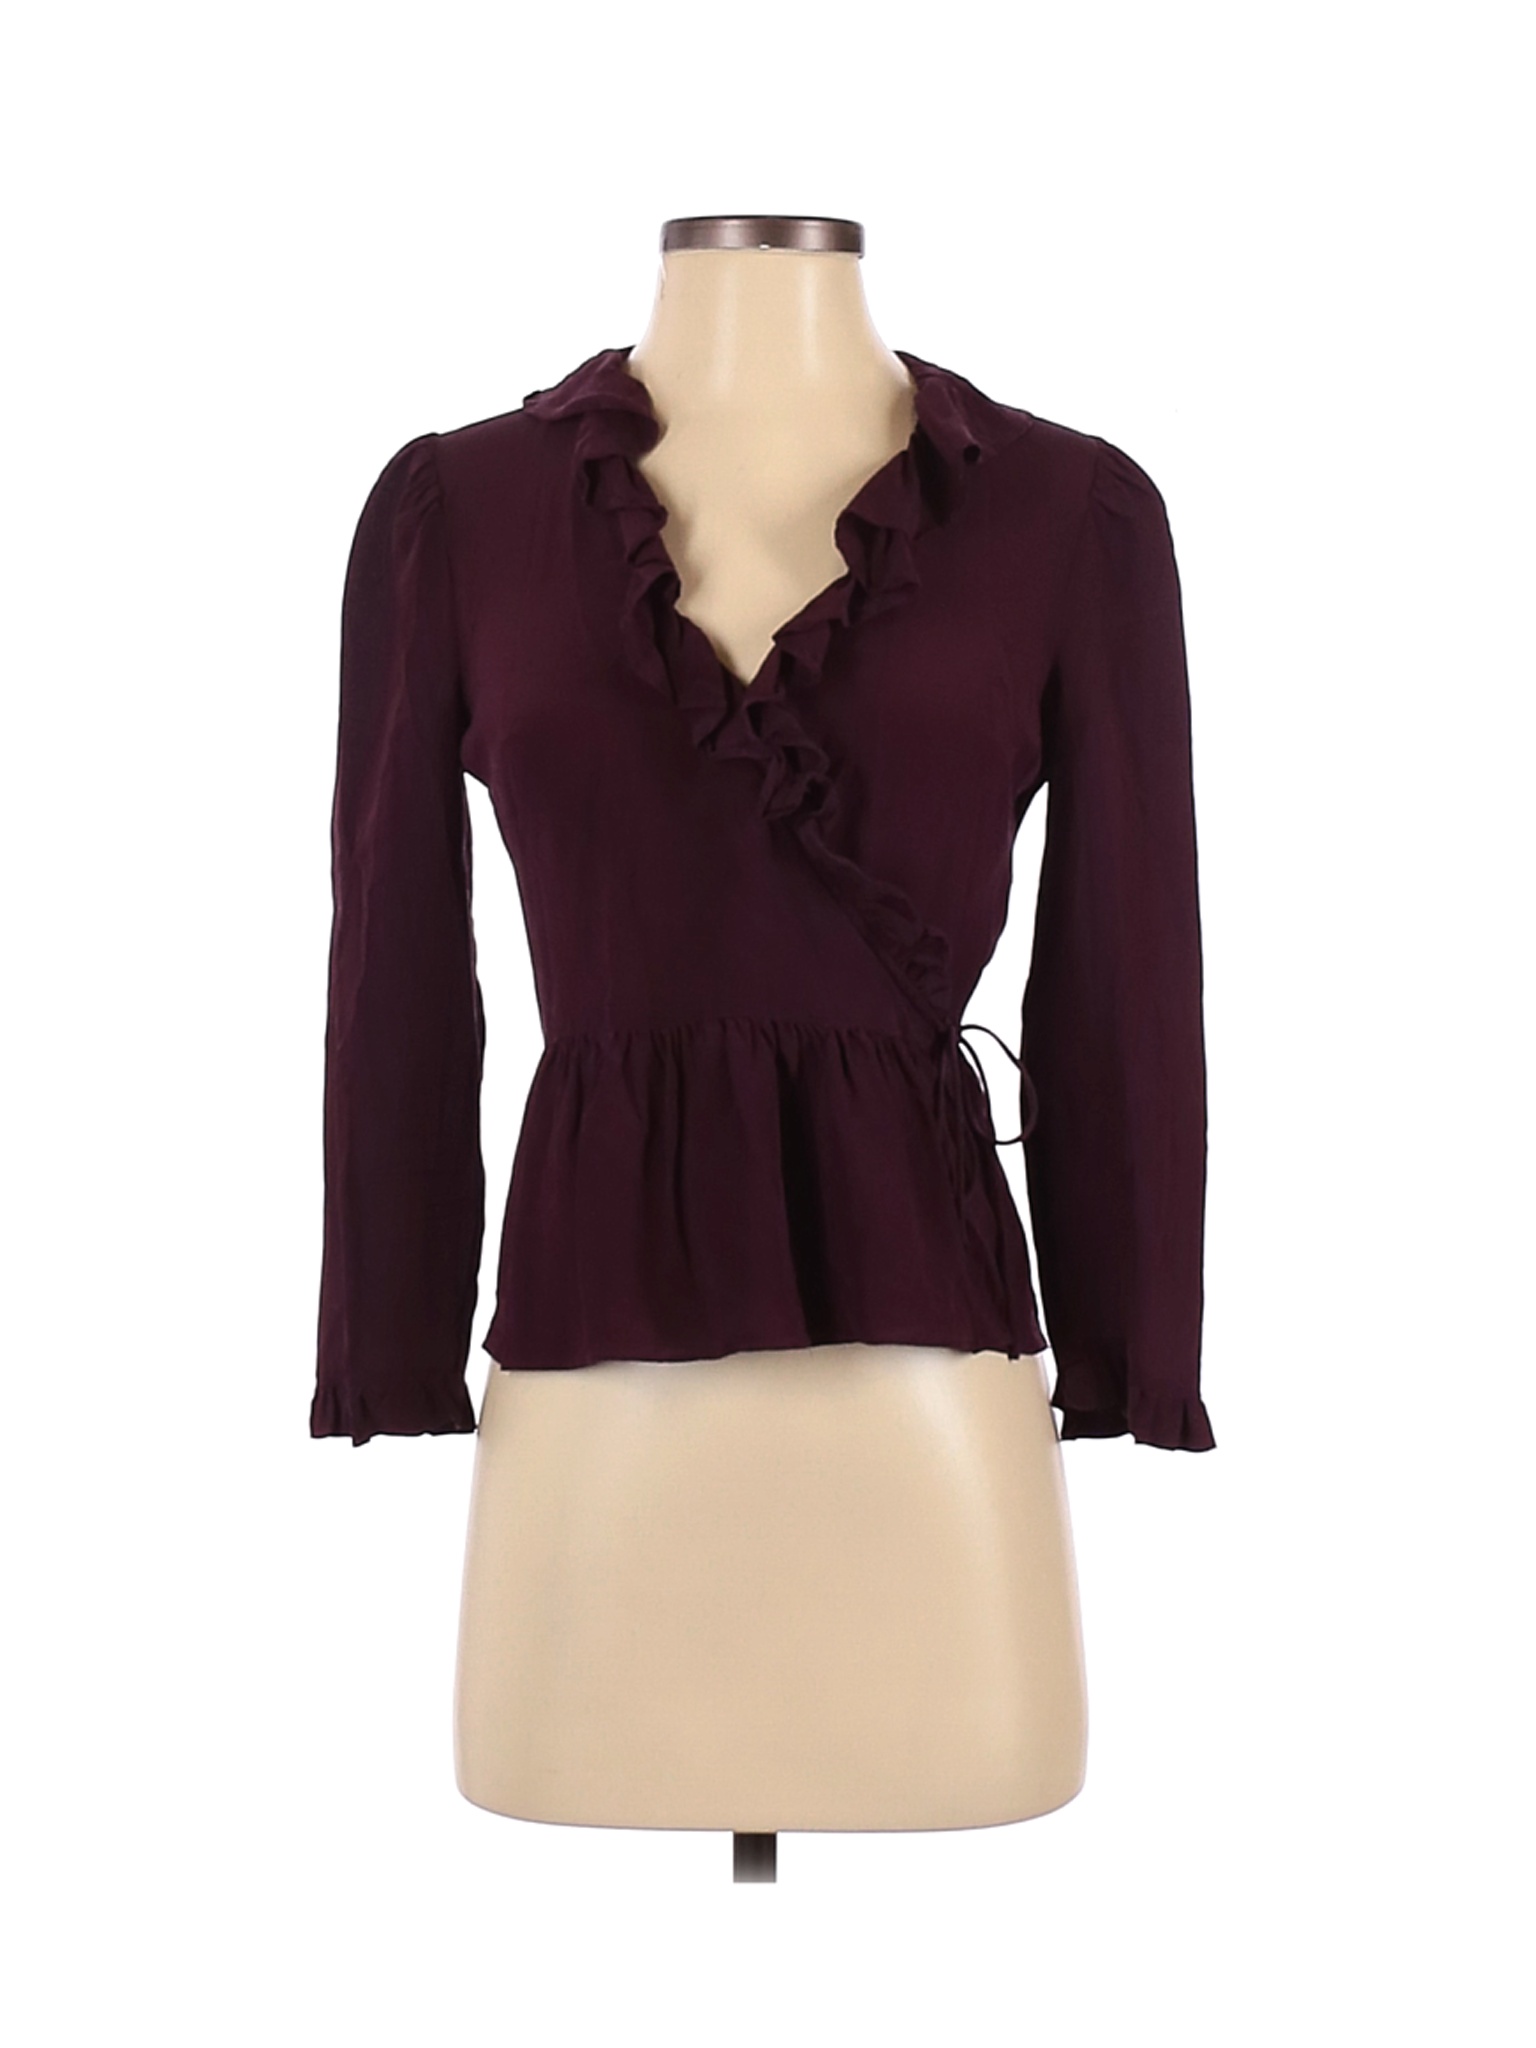 Madewell Women Red Long Sleeve Silk Top XS | eBay